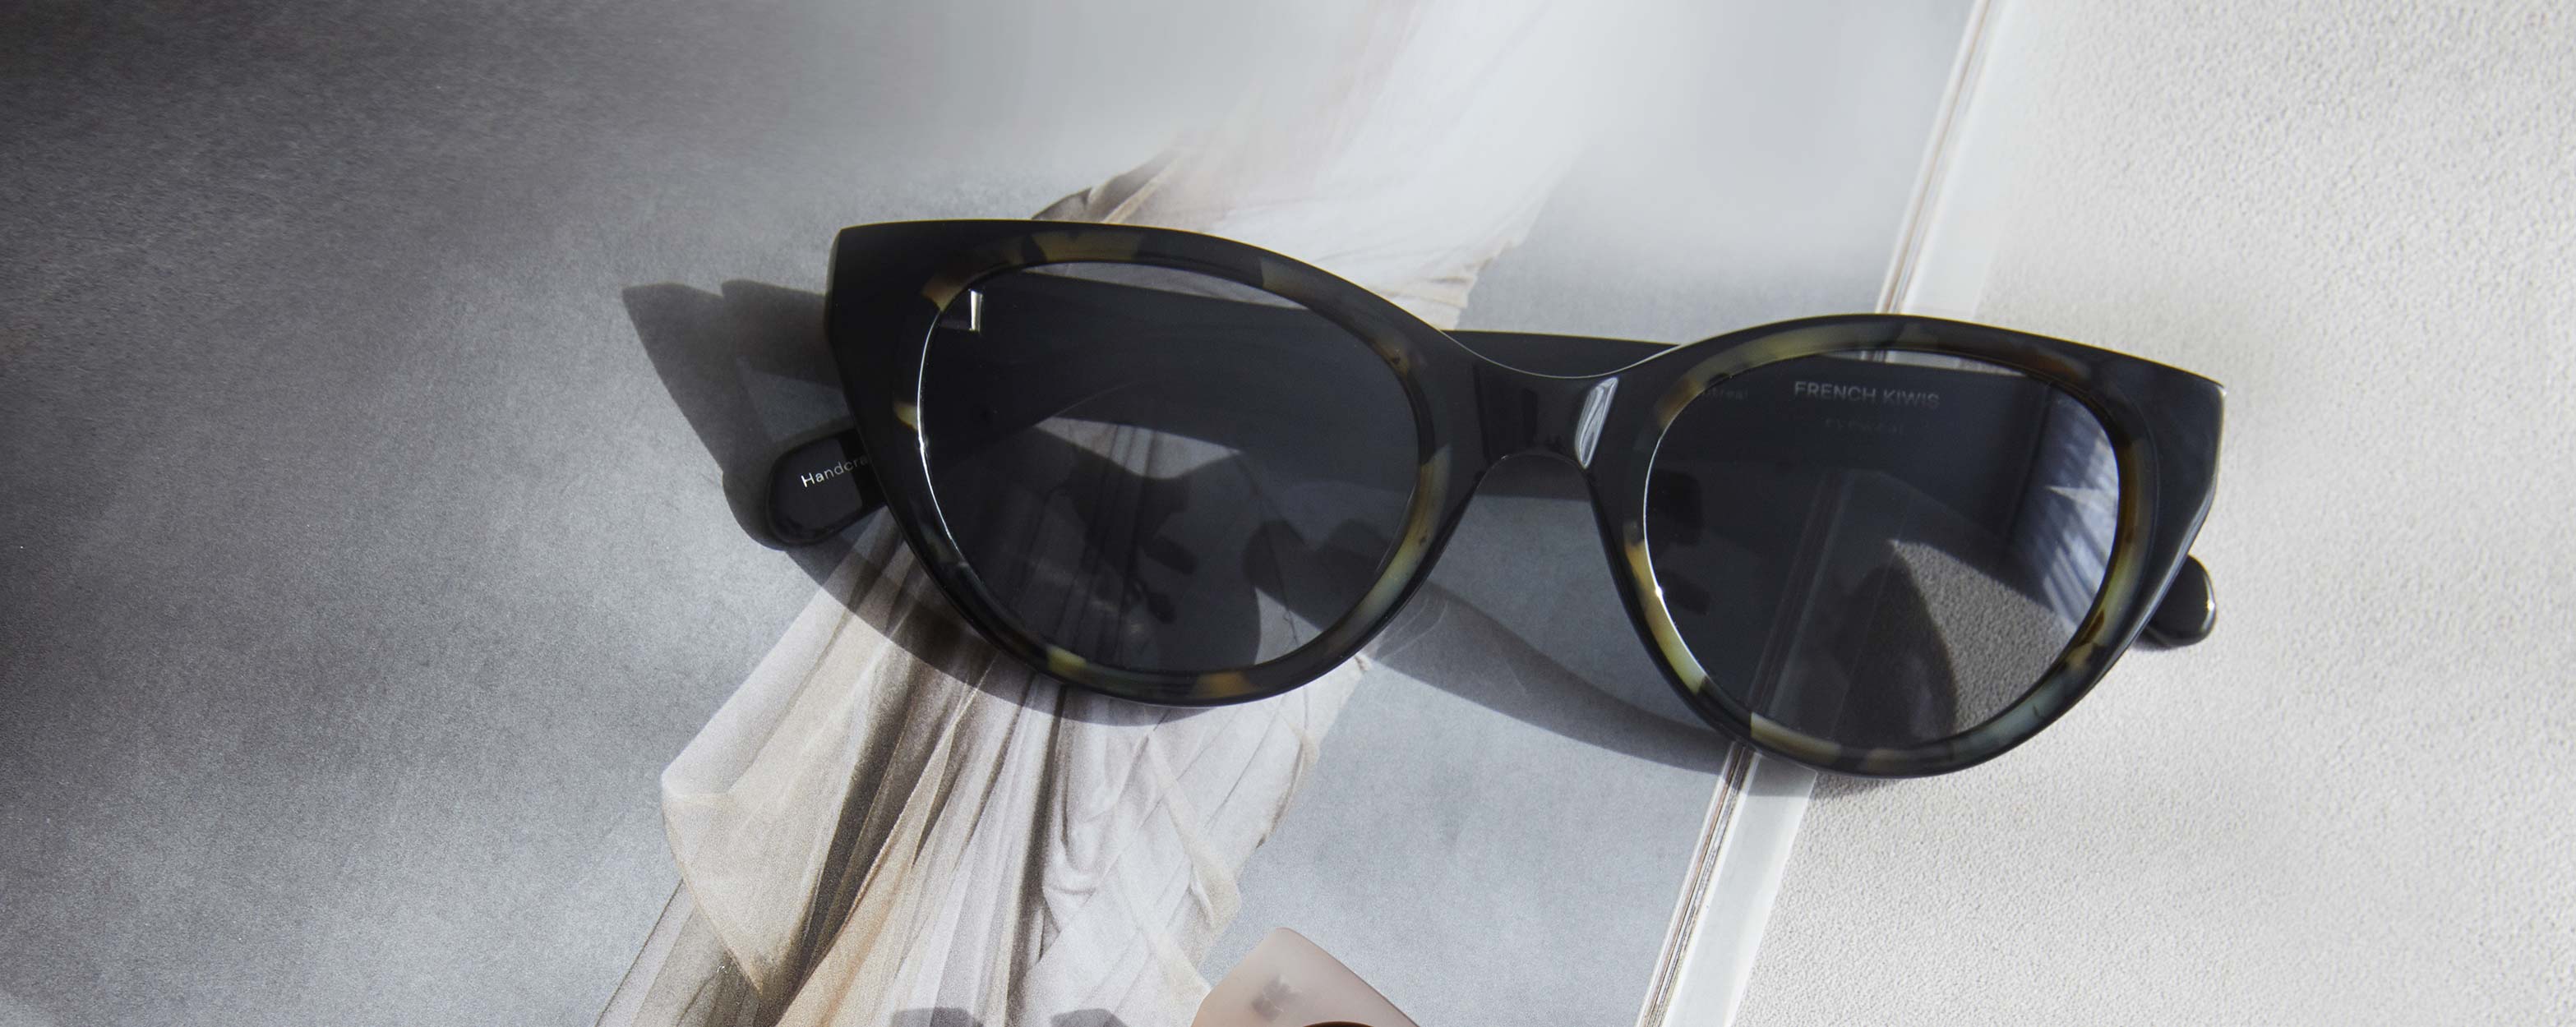 Photo Details of Colette Sun Rosé & Tortoise Sun Glasses in a room